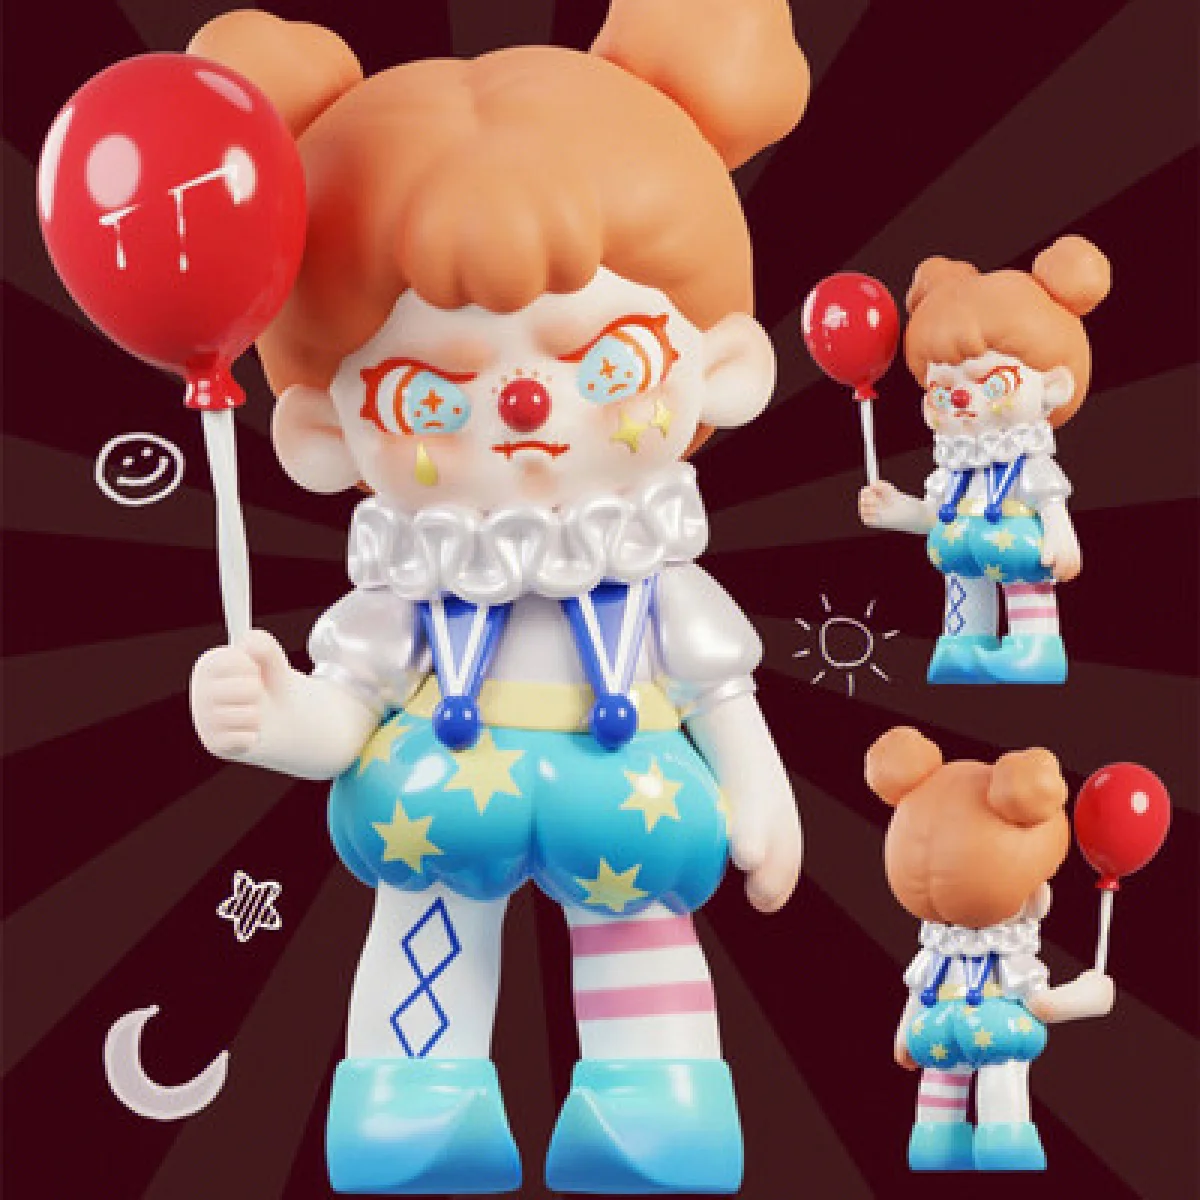 DORA Keep Strangers Away Series 2 Blind Box Toys Kawaii Anime Action Figure Caixa Caja Surprise Mystery Box Dolls Girls Gift